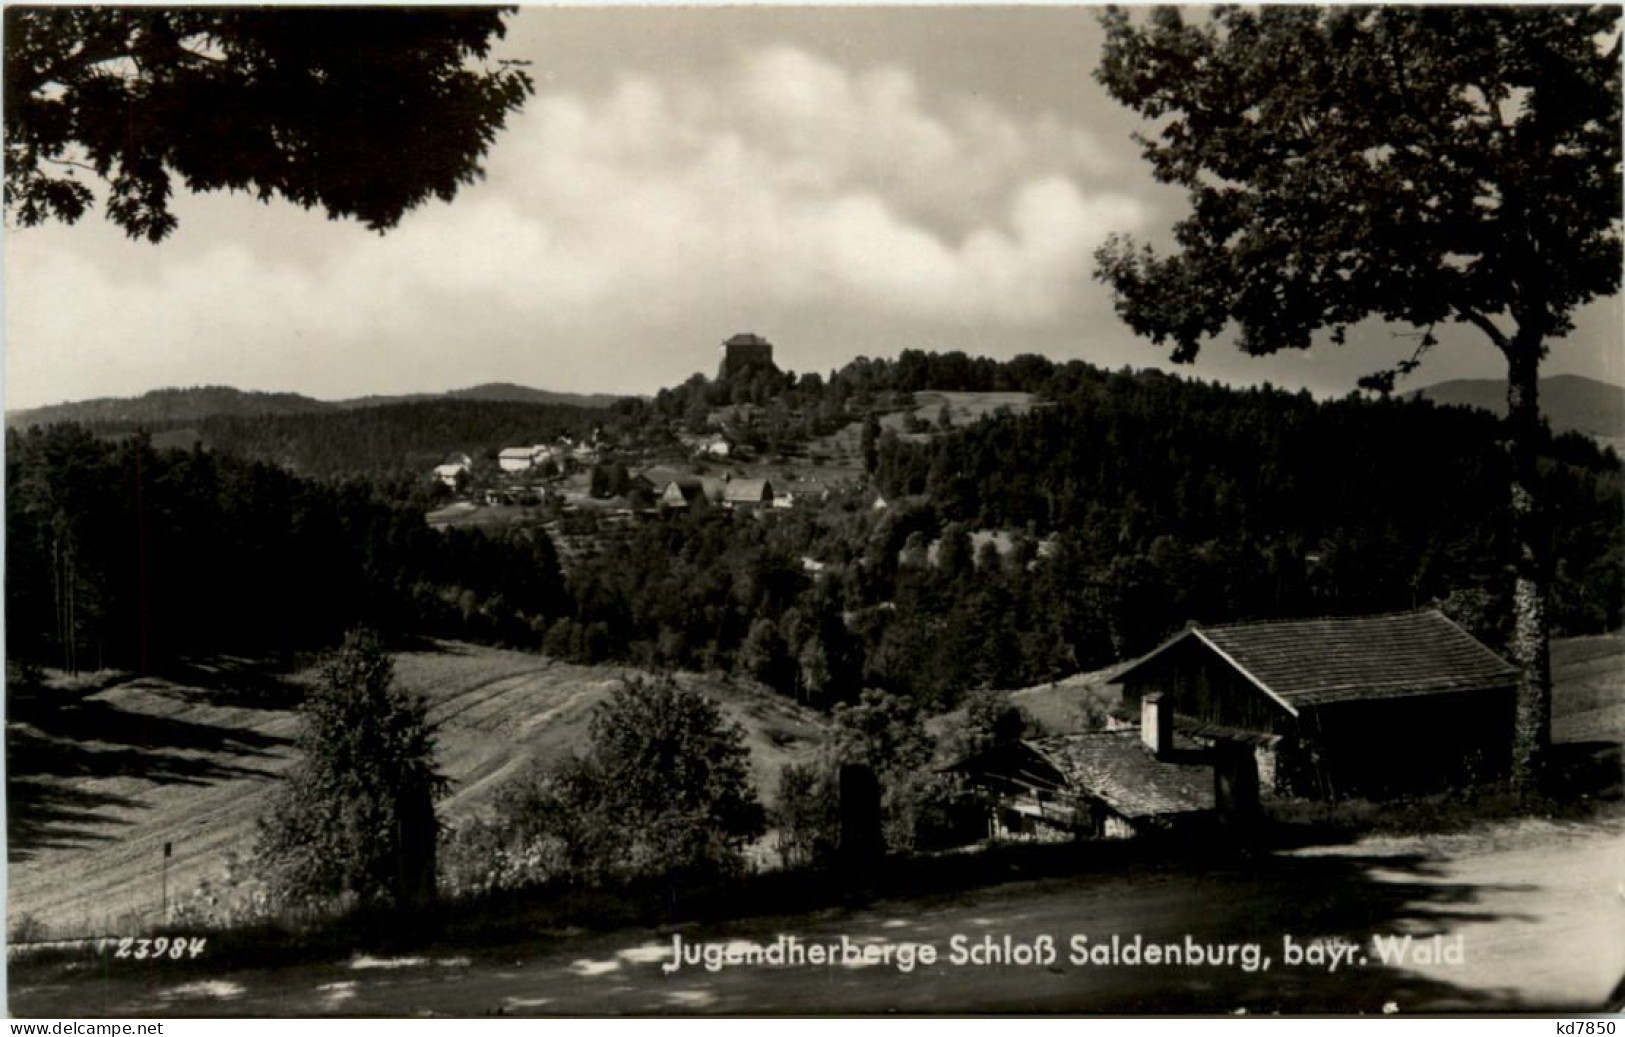 Jugendherberge Schloss Saldenburg - Freyung